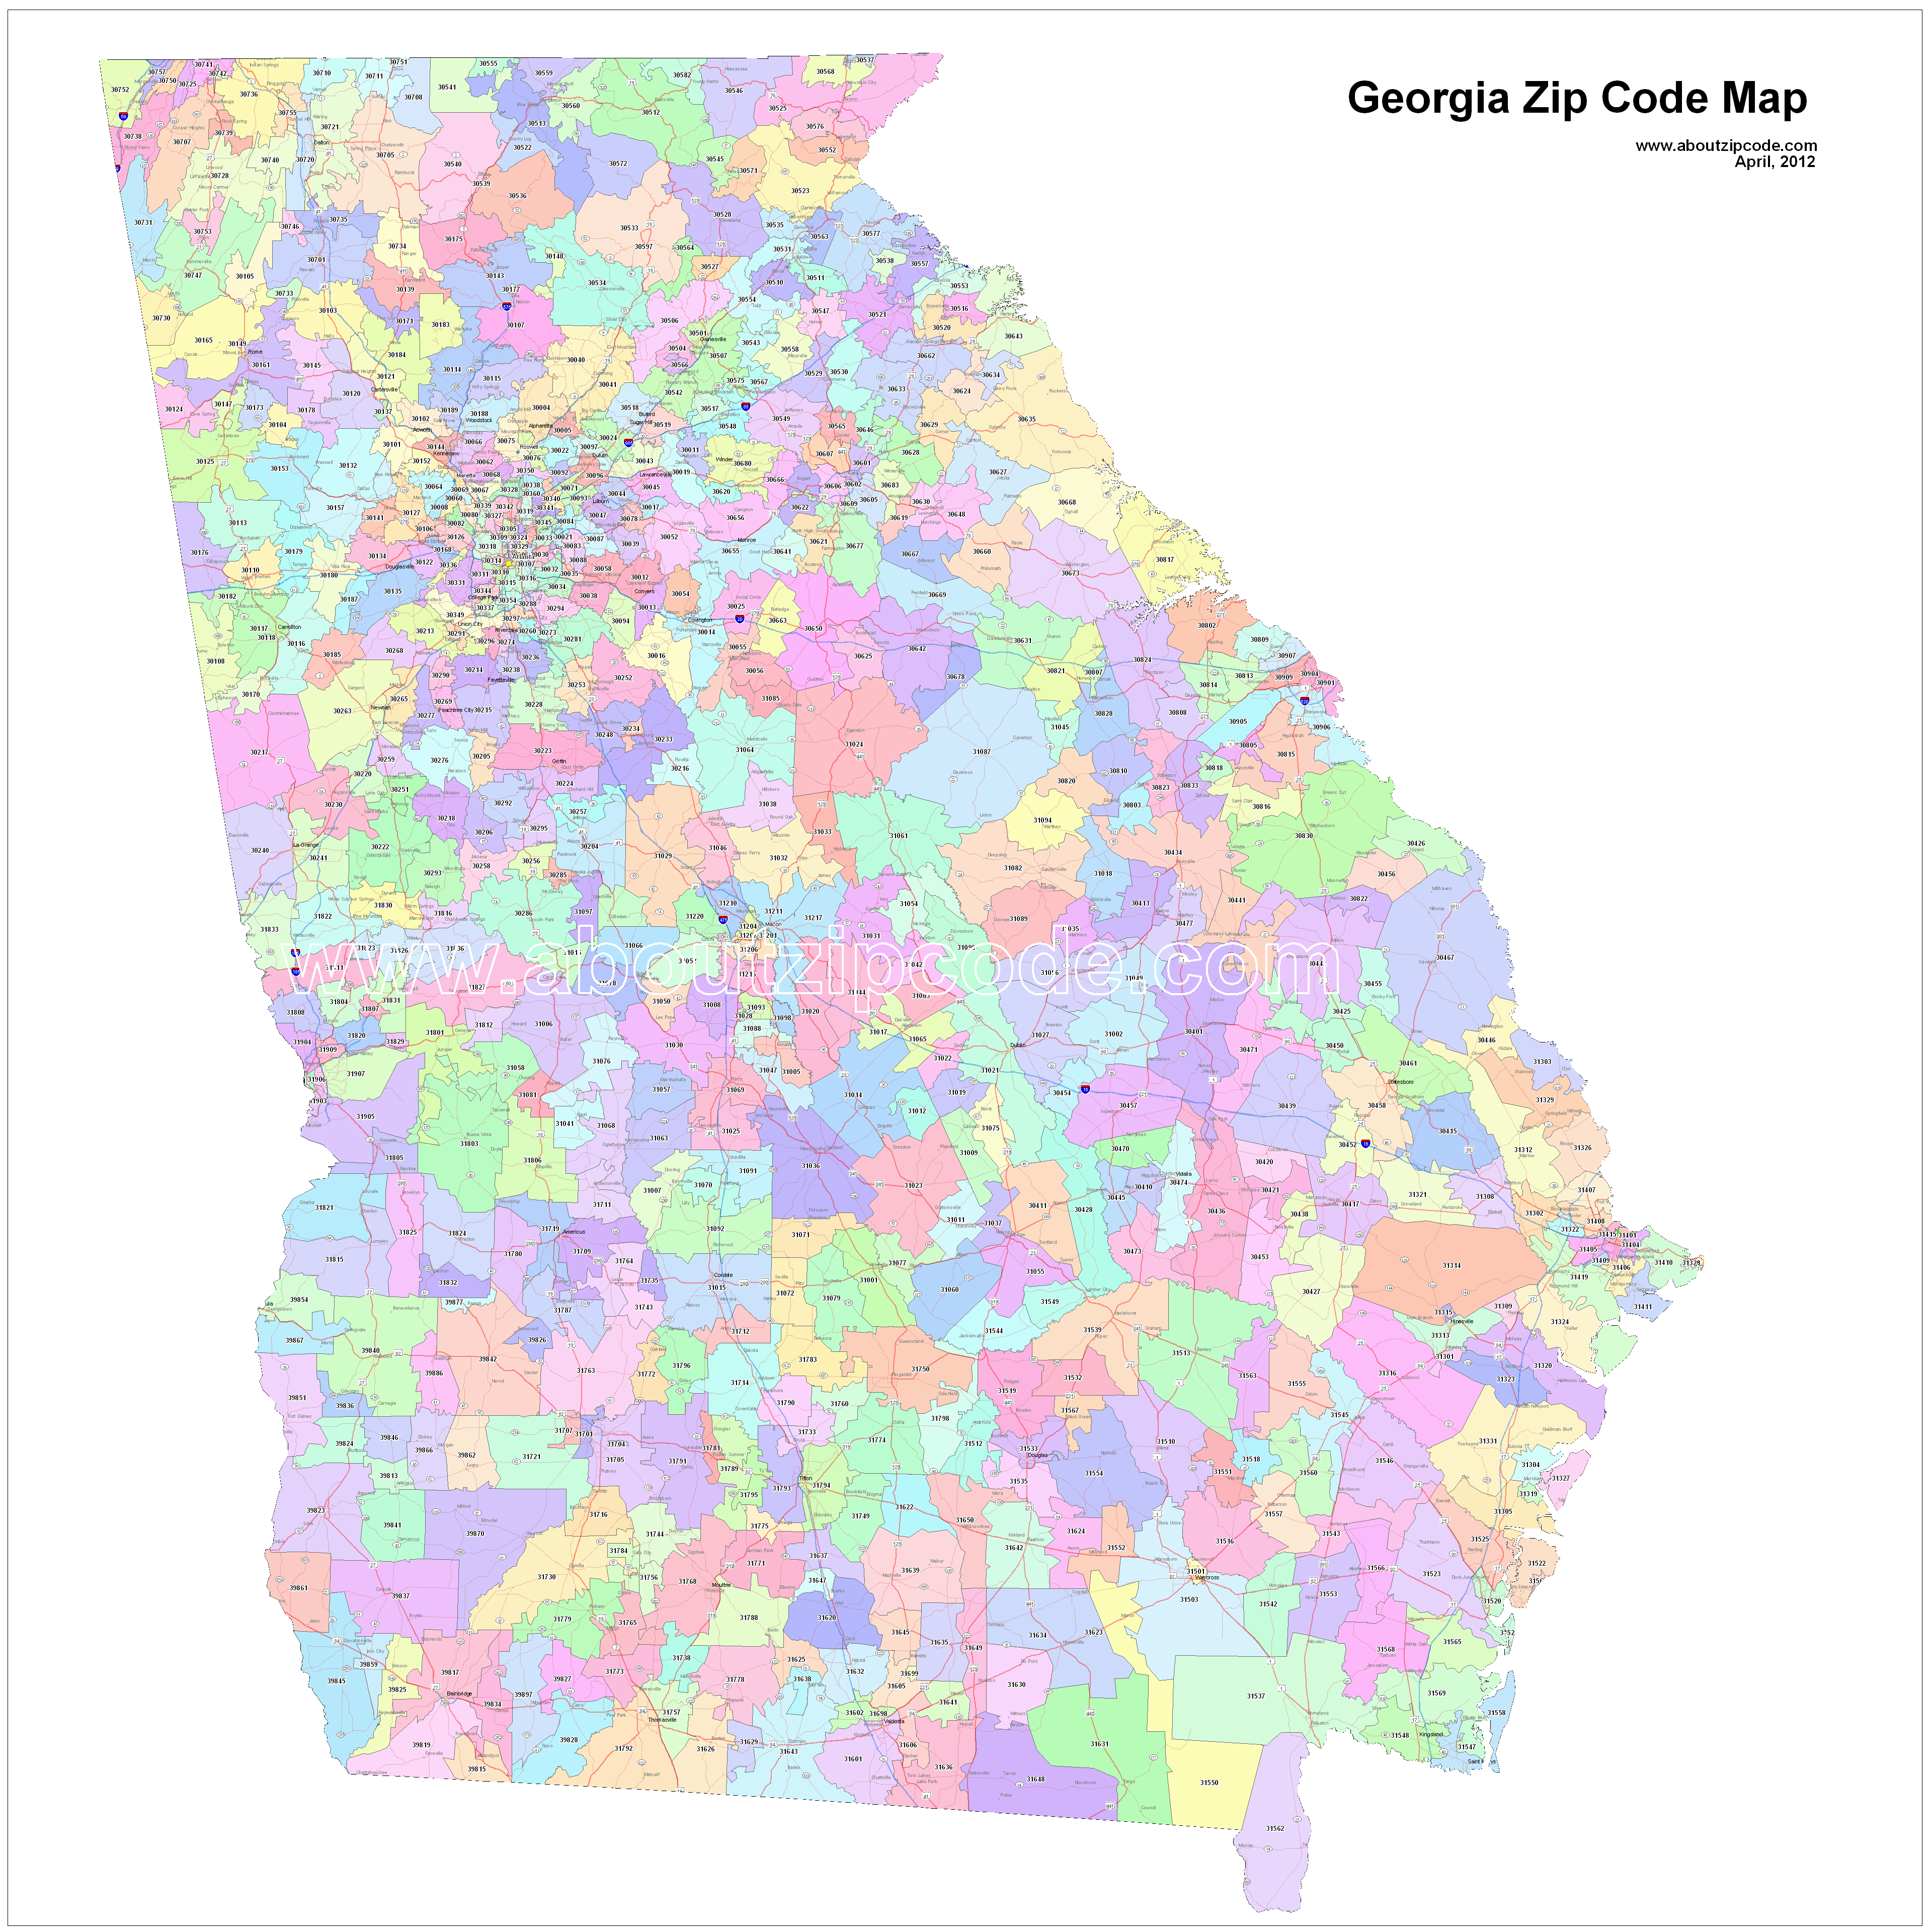 union city ga zip code map Georgia Zip Code Maps Free Georgia Zip Code Maps union city ga zip code map